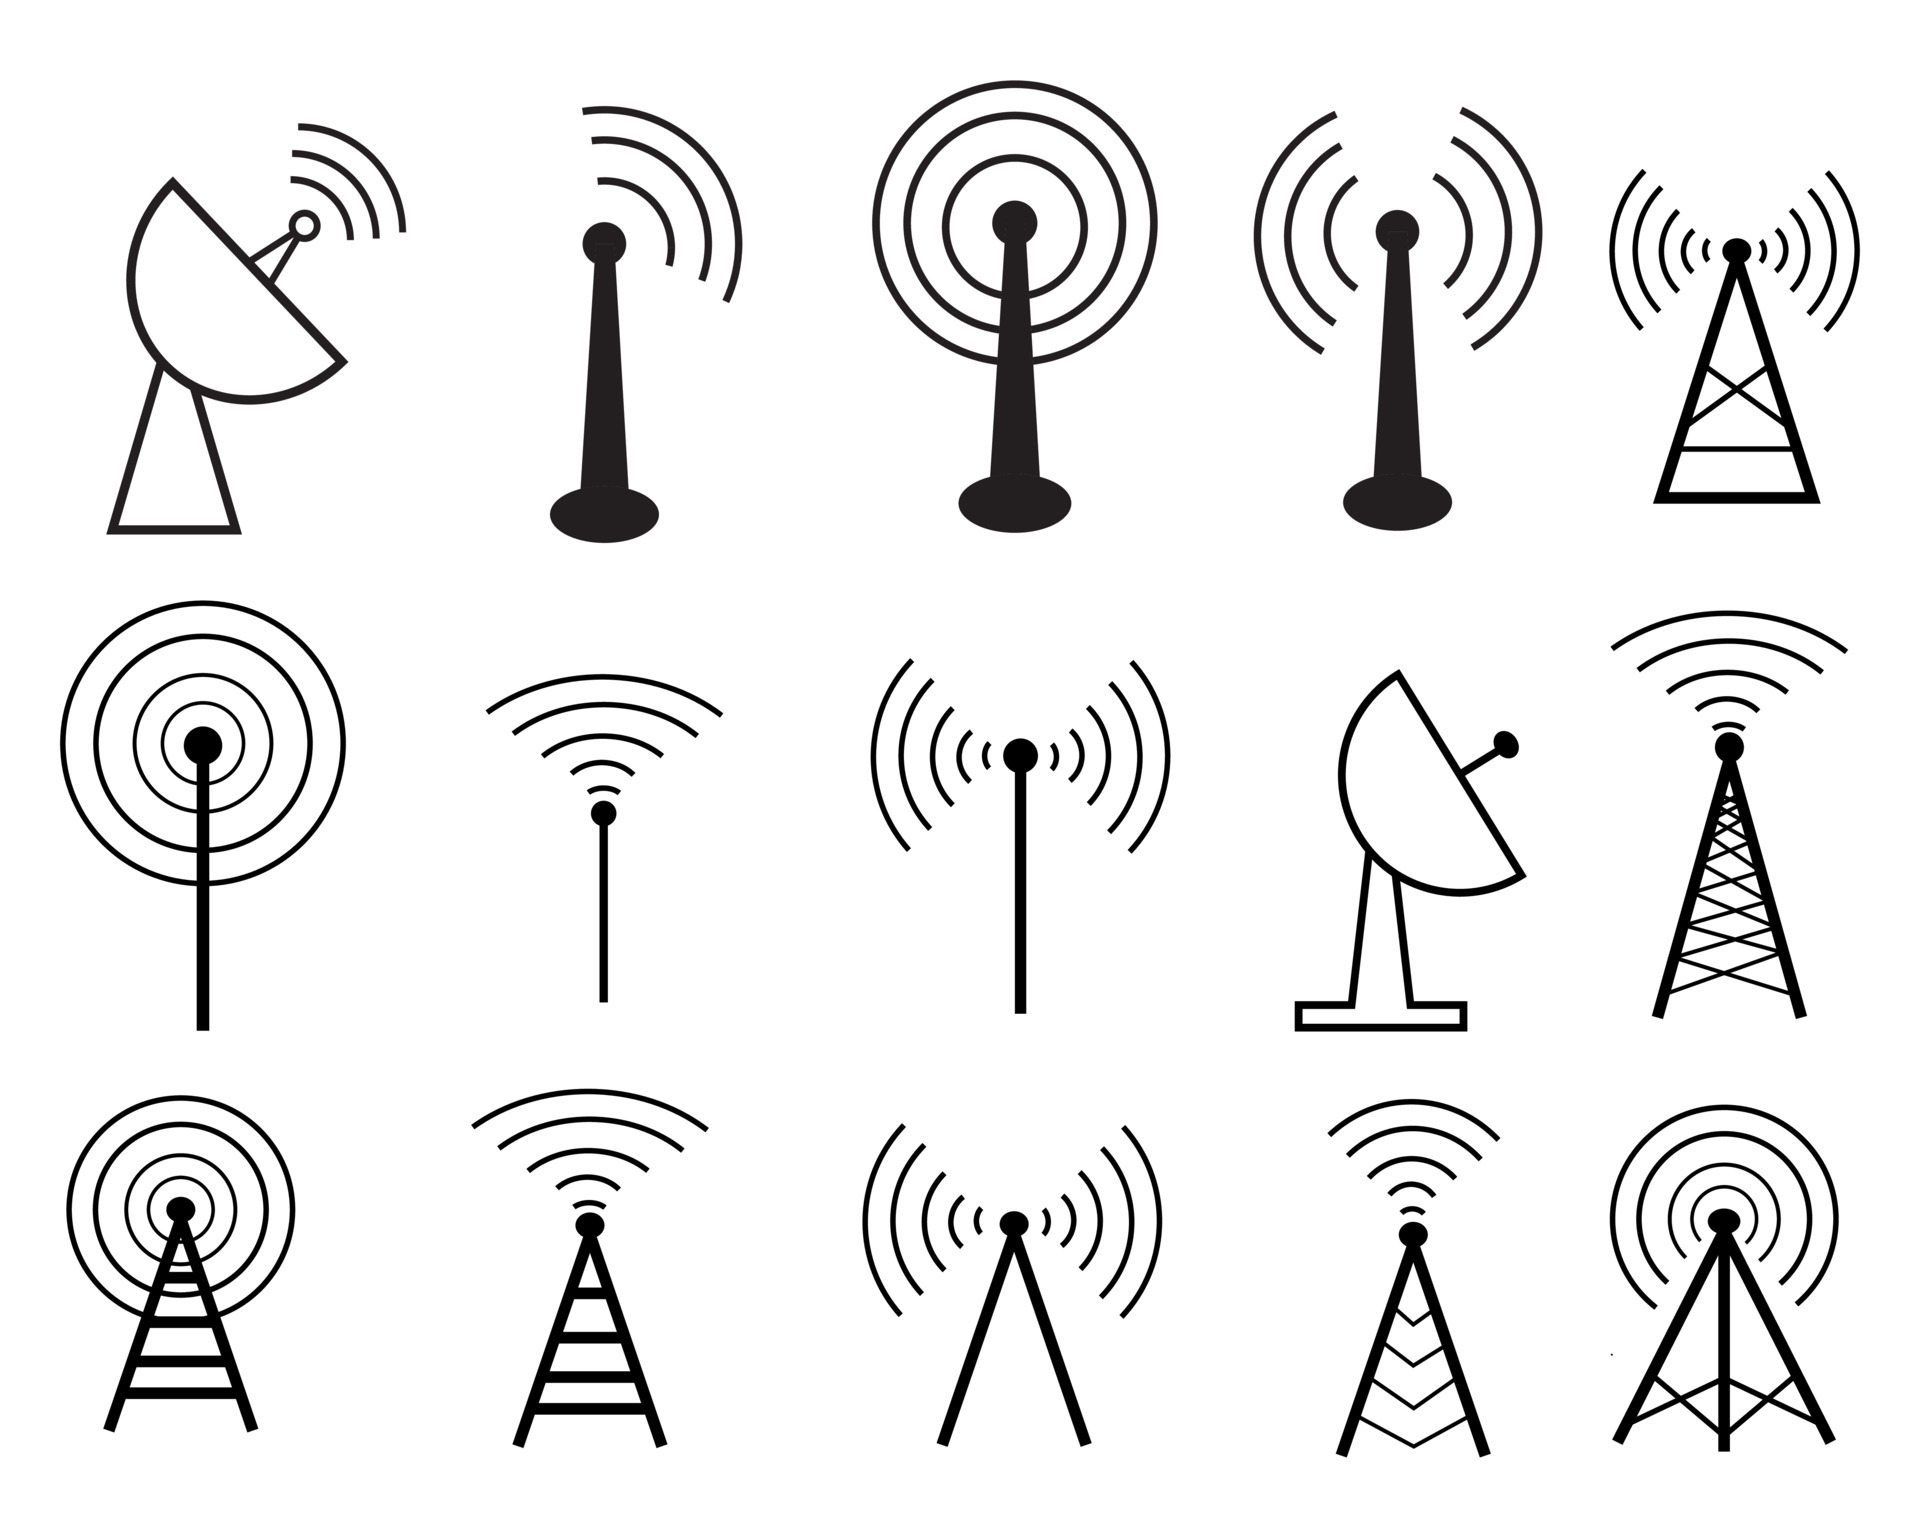 Radio Tower And Pole Linear Icons Set. Radio Communication Tower